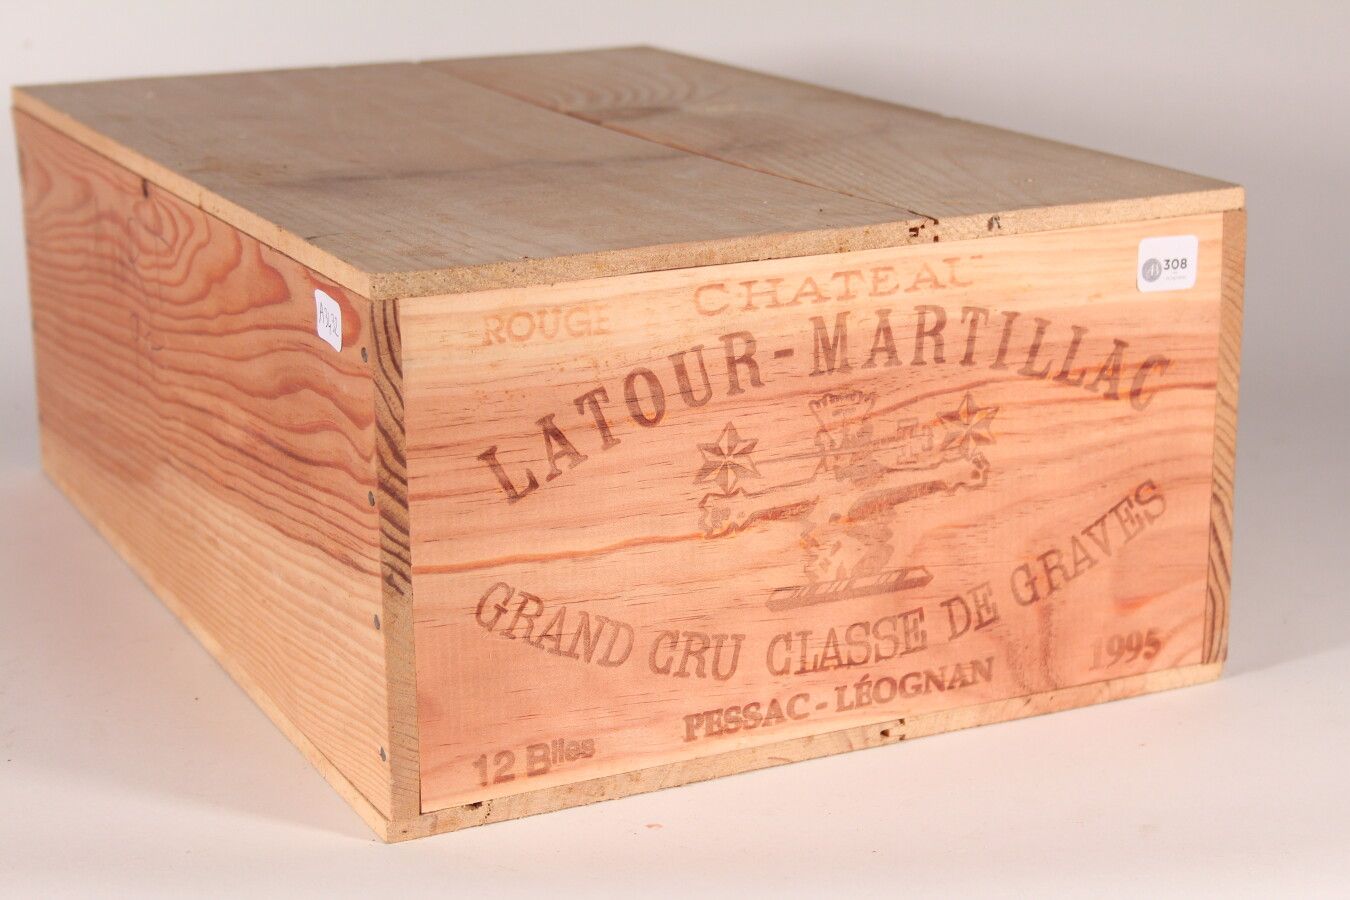 Null 1995 - Château Latour Martillac

Pessac-Léognan - 12 botellas